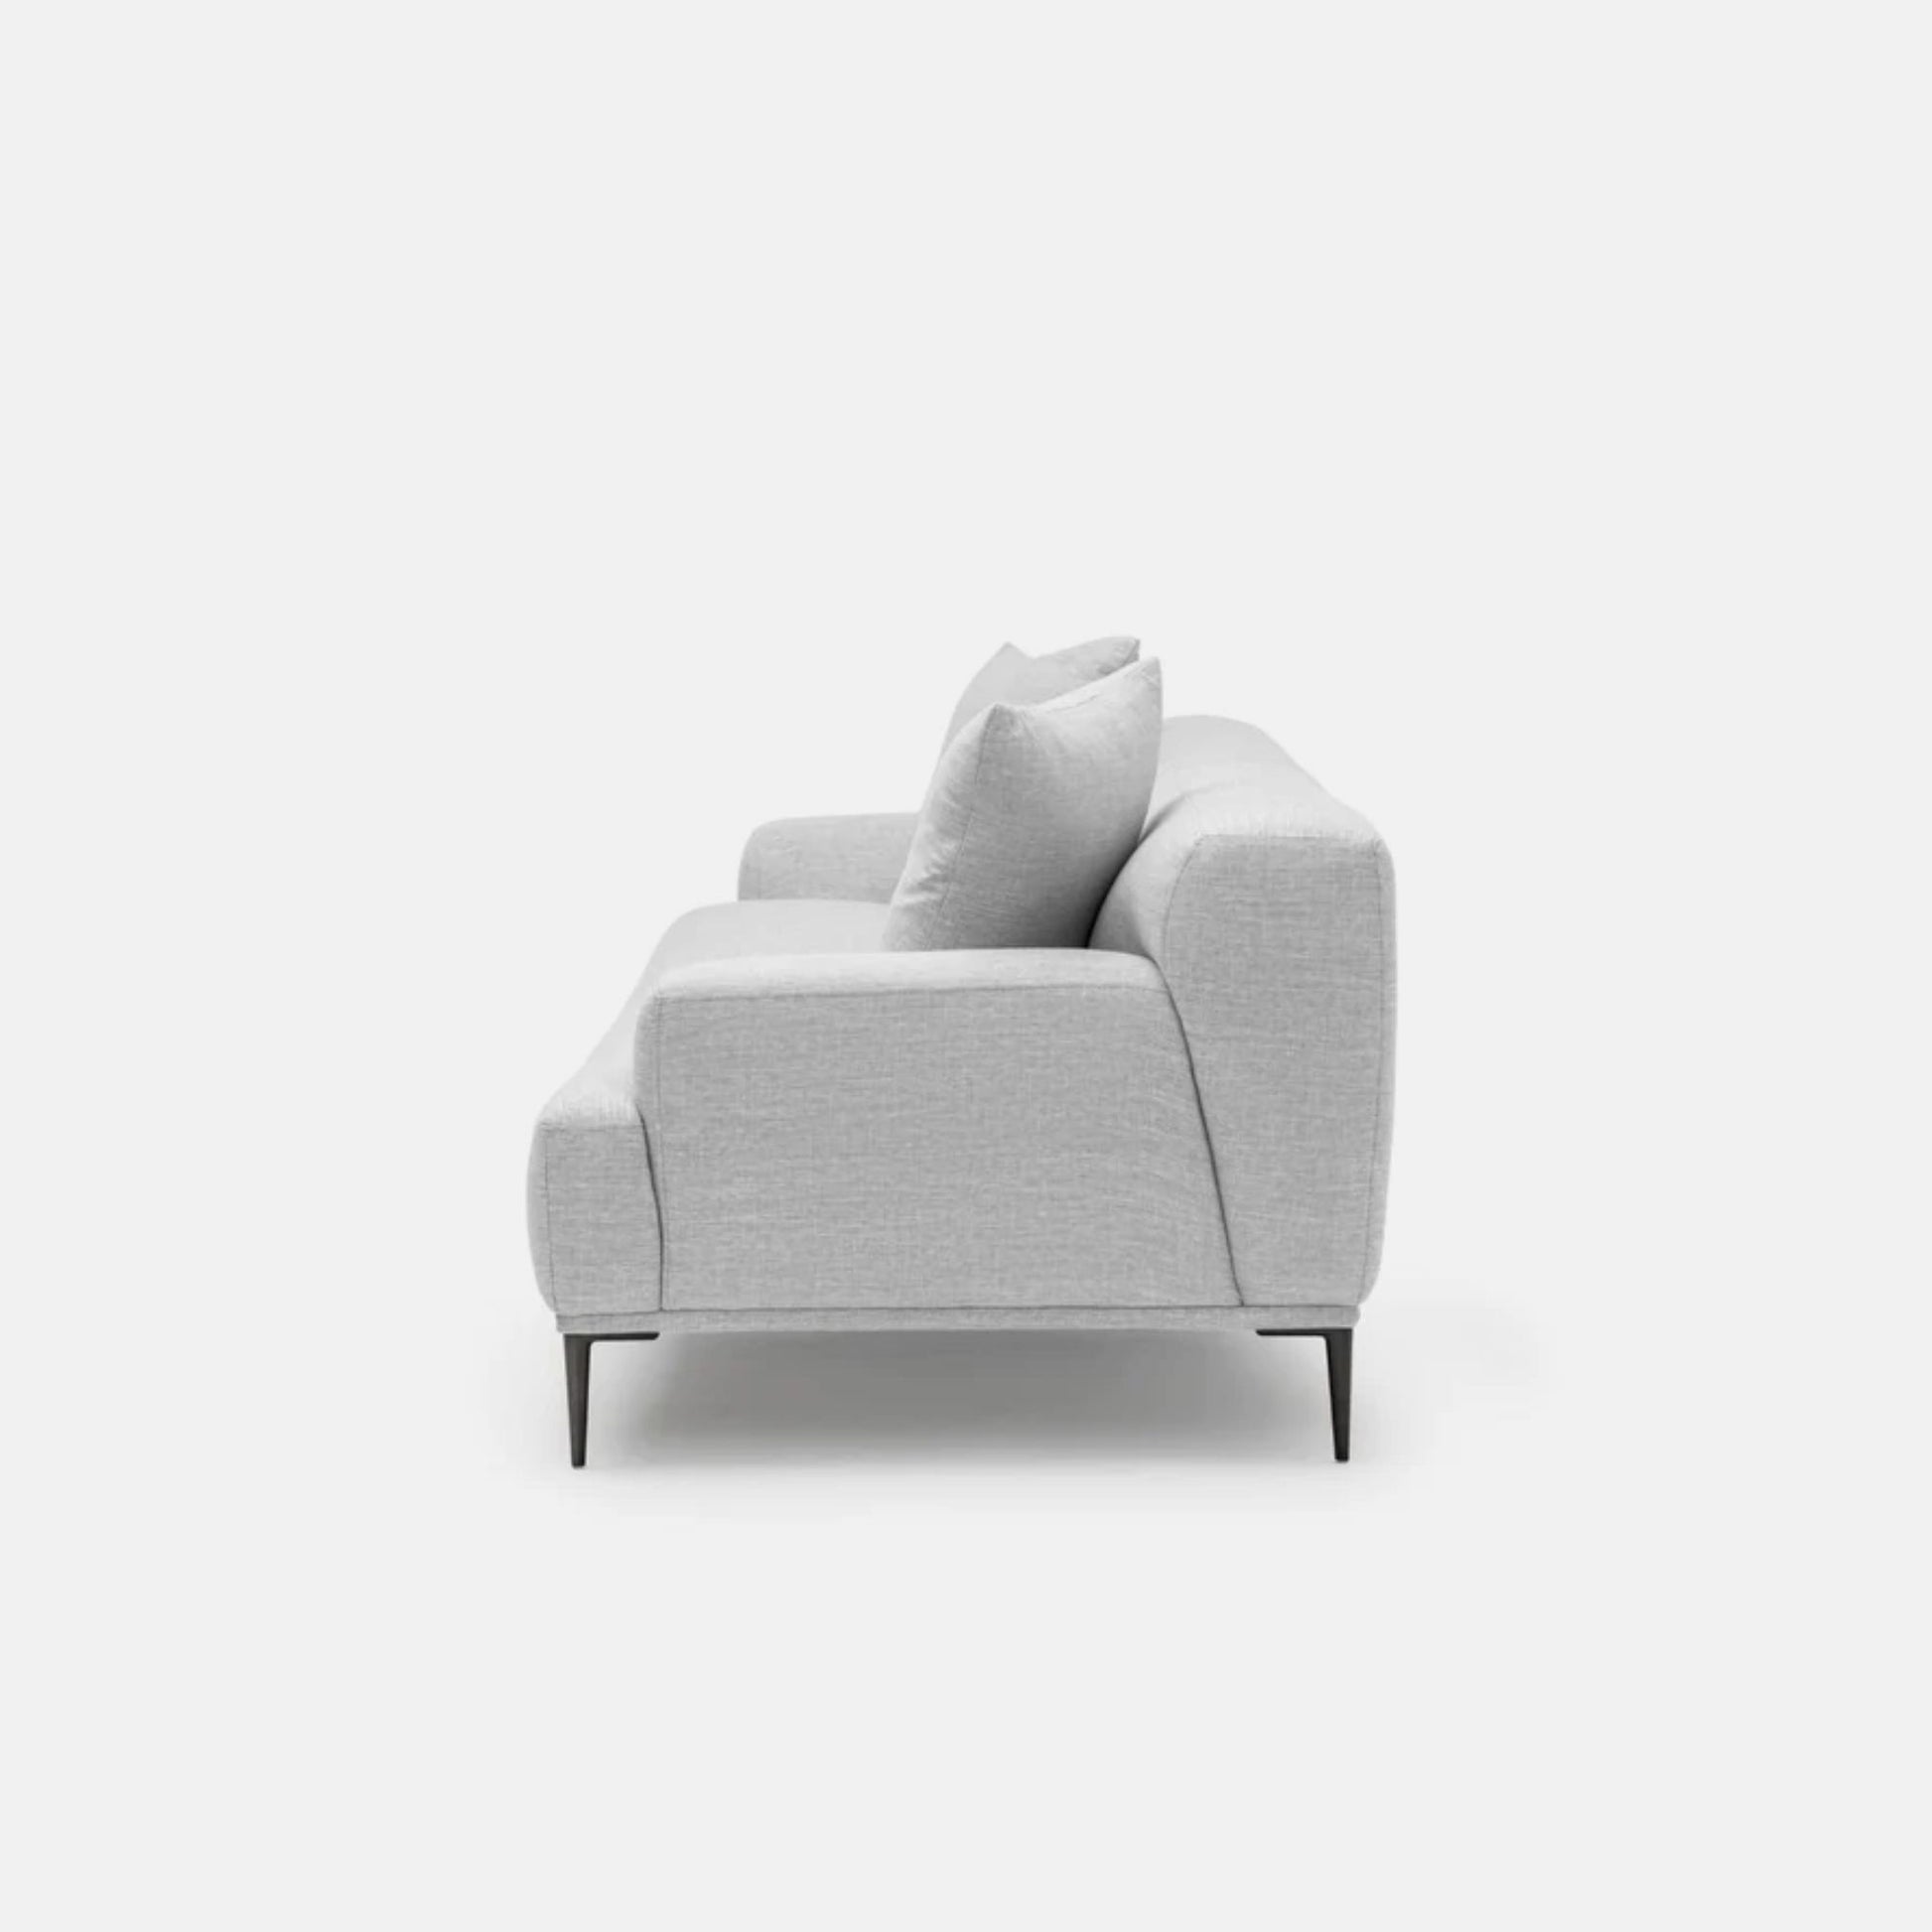 Crystal grey polyester blend sofa